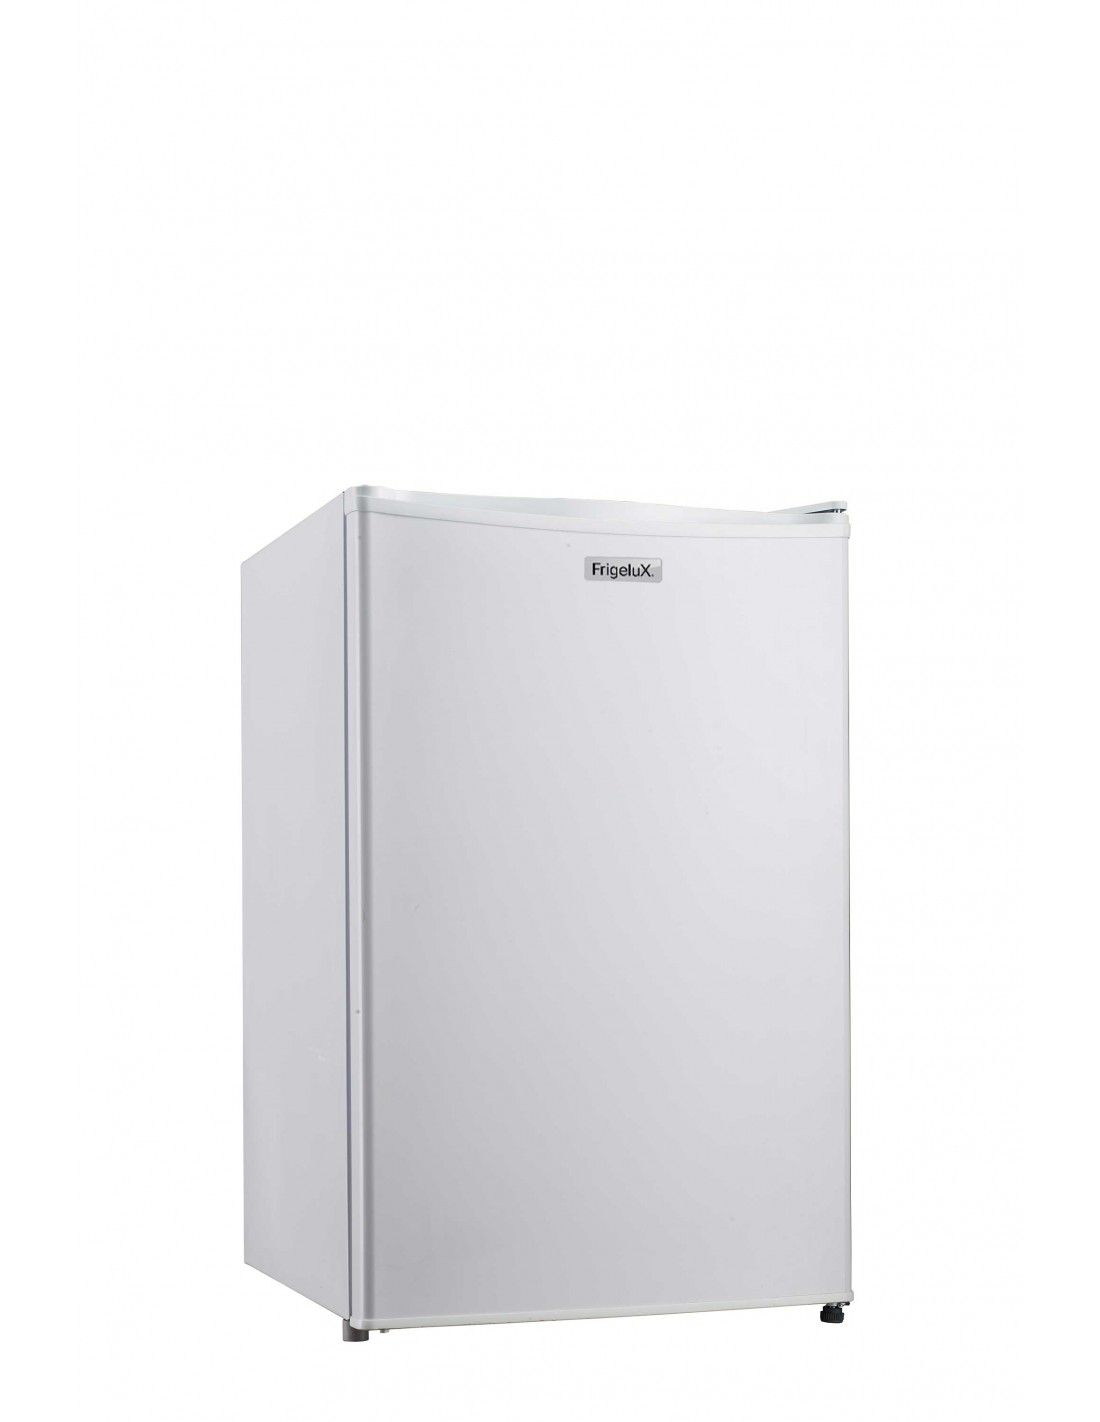 Frigo Top 90 Litres - Réfrigérateurs